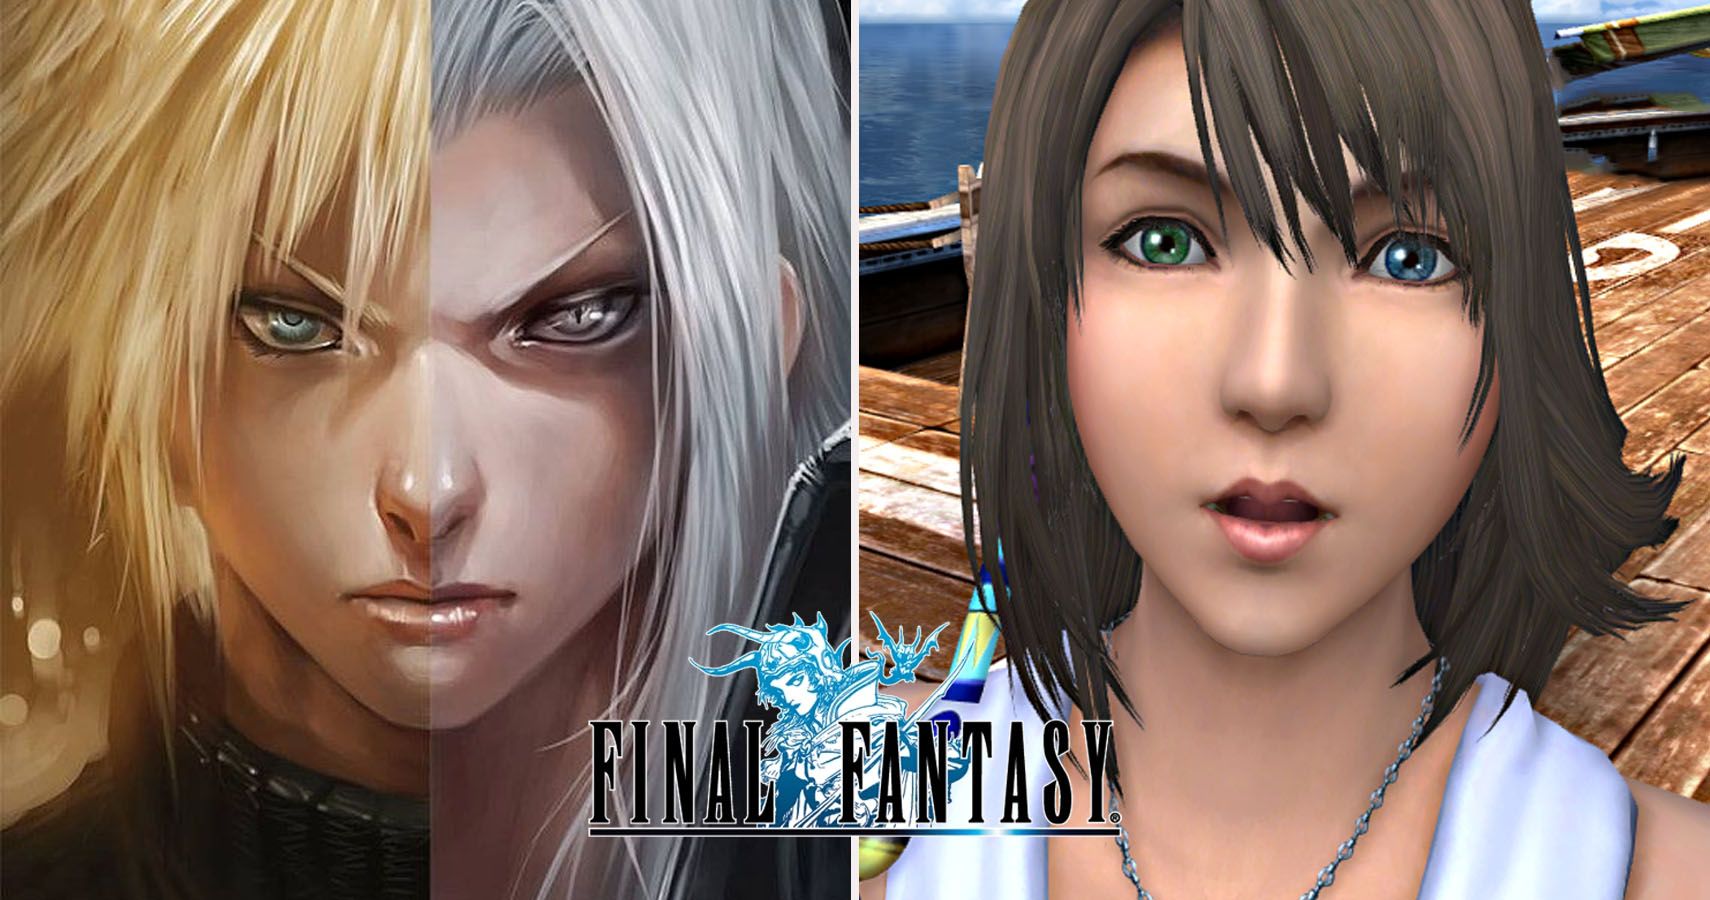 The original Final Fantasy shouldn't be modernized - Polygon